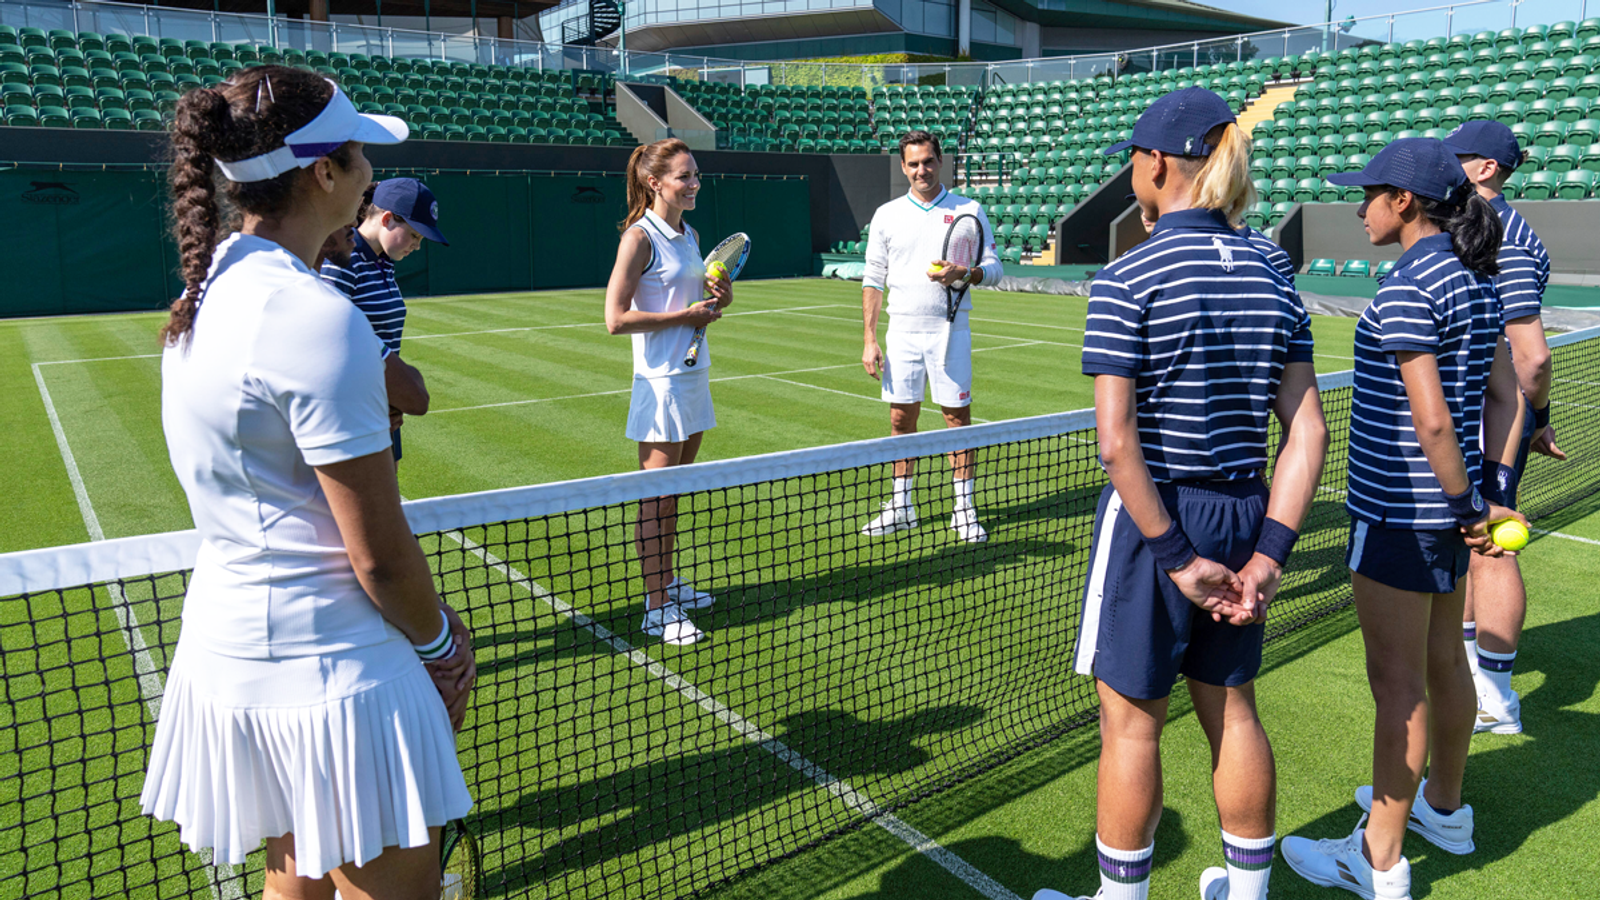 Wimbledon Roger Federer and Prinzessin Kate als Ballkinder Tennis News Sky Sport